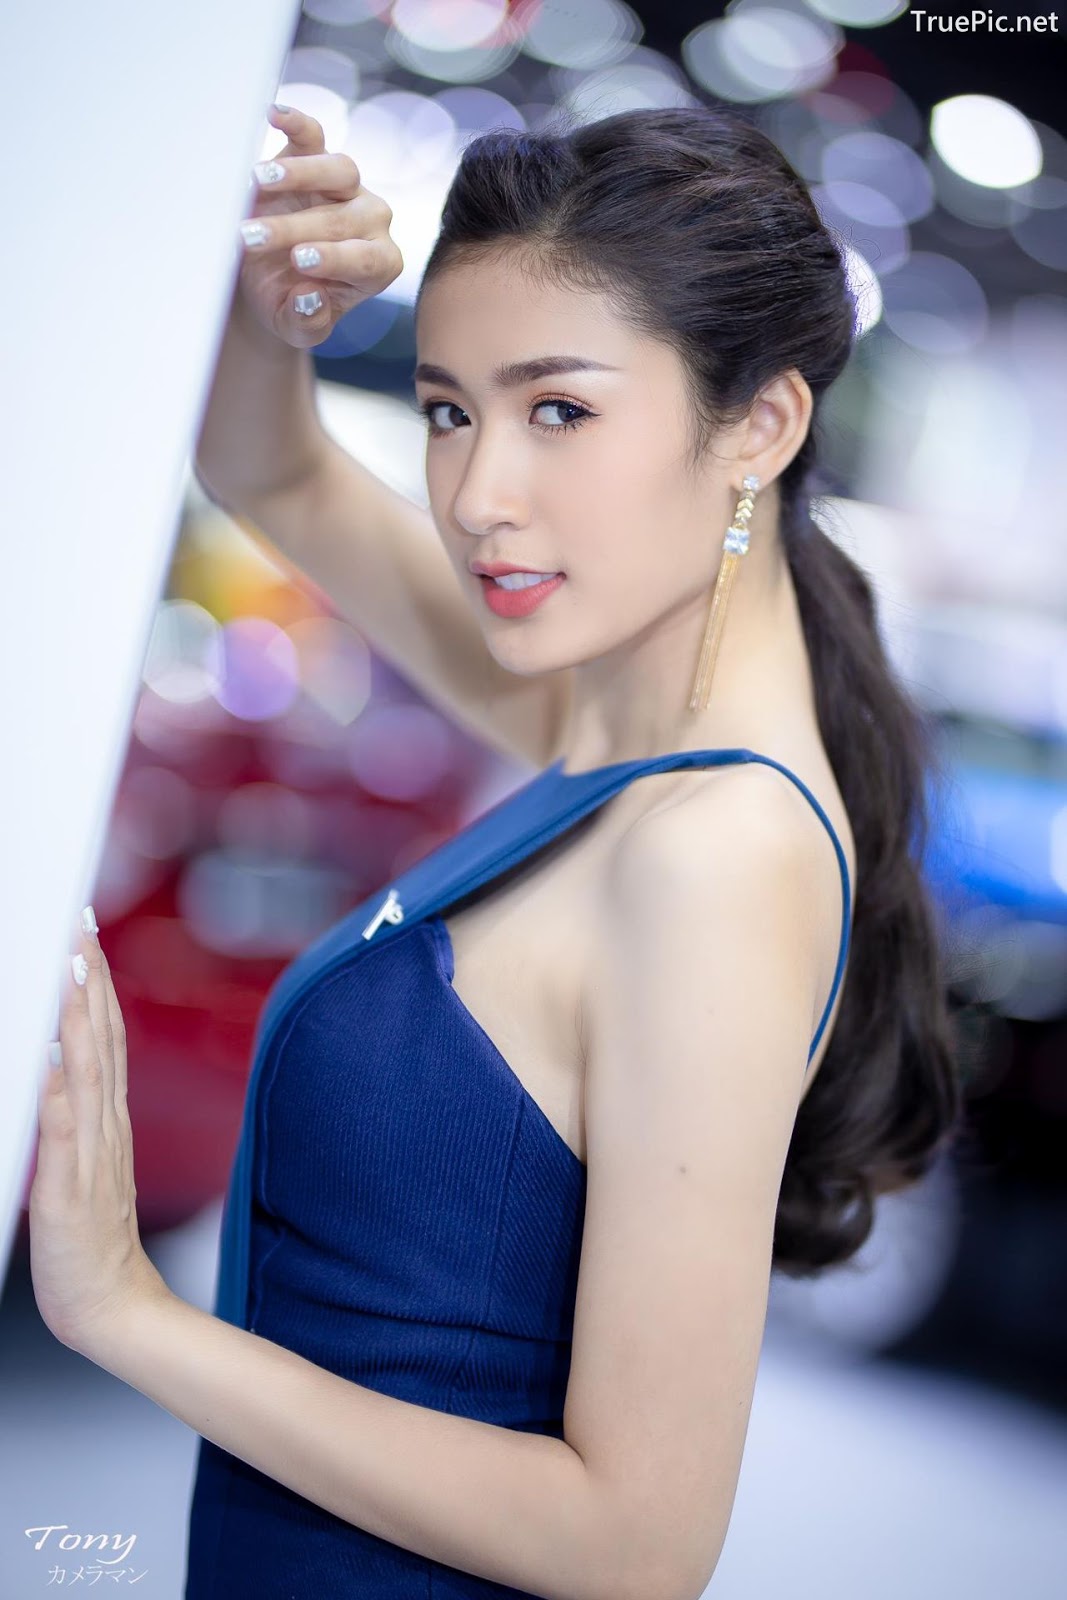 Image-Thailand-Hot-Model-Thai-Racing-Girl-At-Big-Motor-2018-TruePic.net- Picture-107